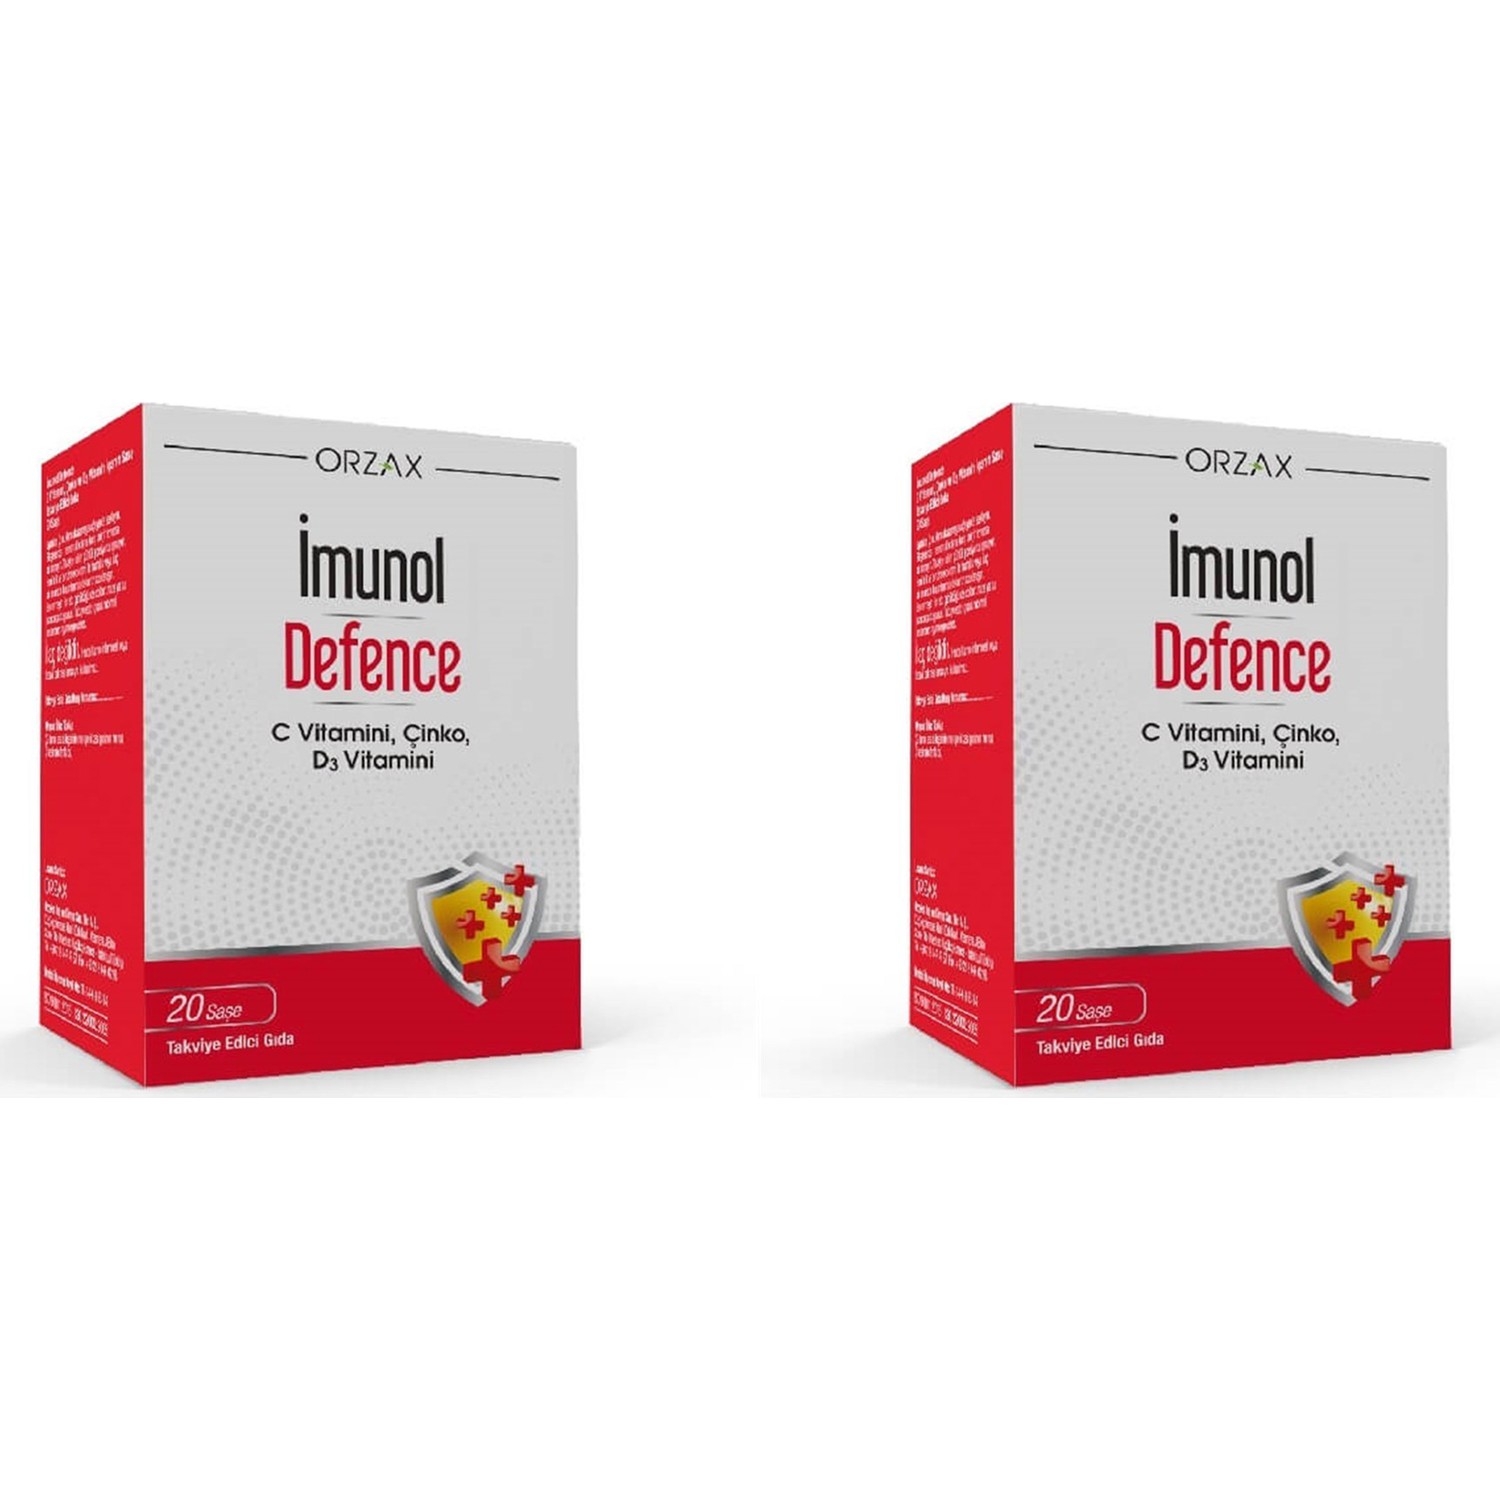 Пищевая добавка Orzax Ocean Imunol Defense, 20 пакетиков цена и фото